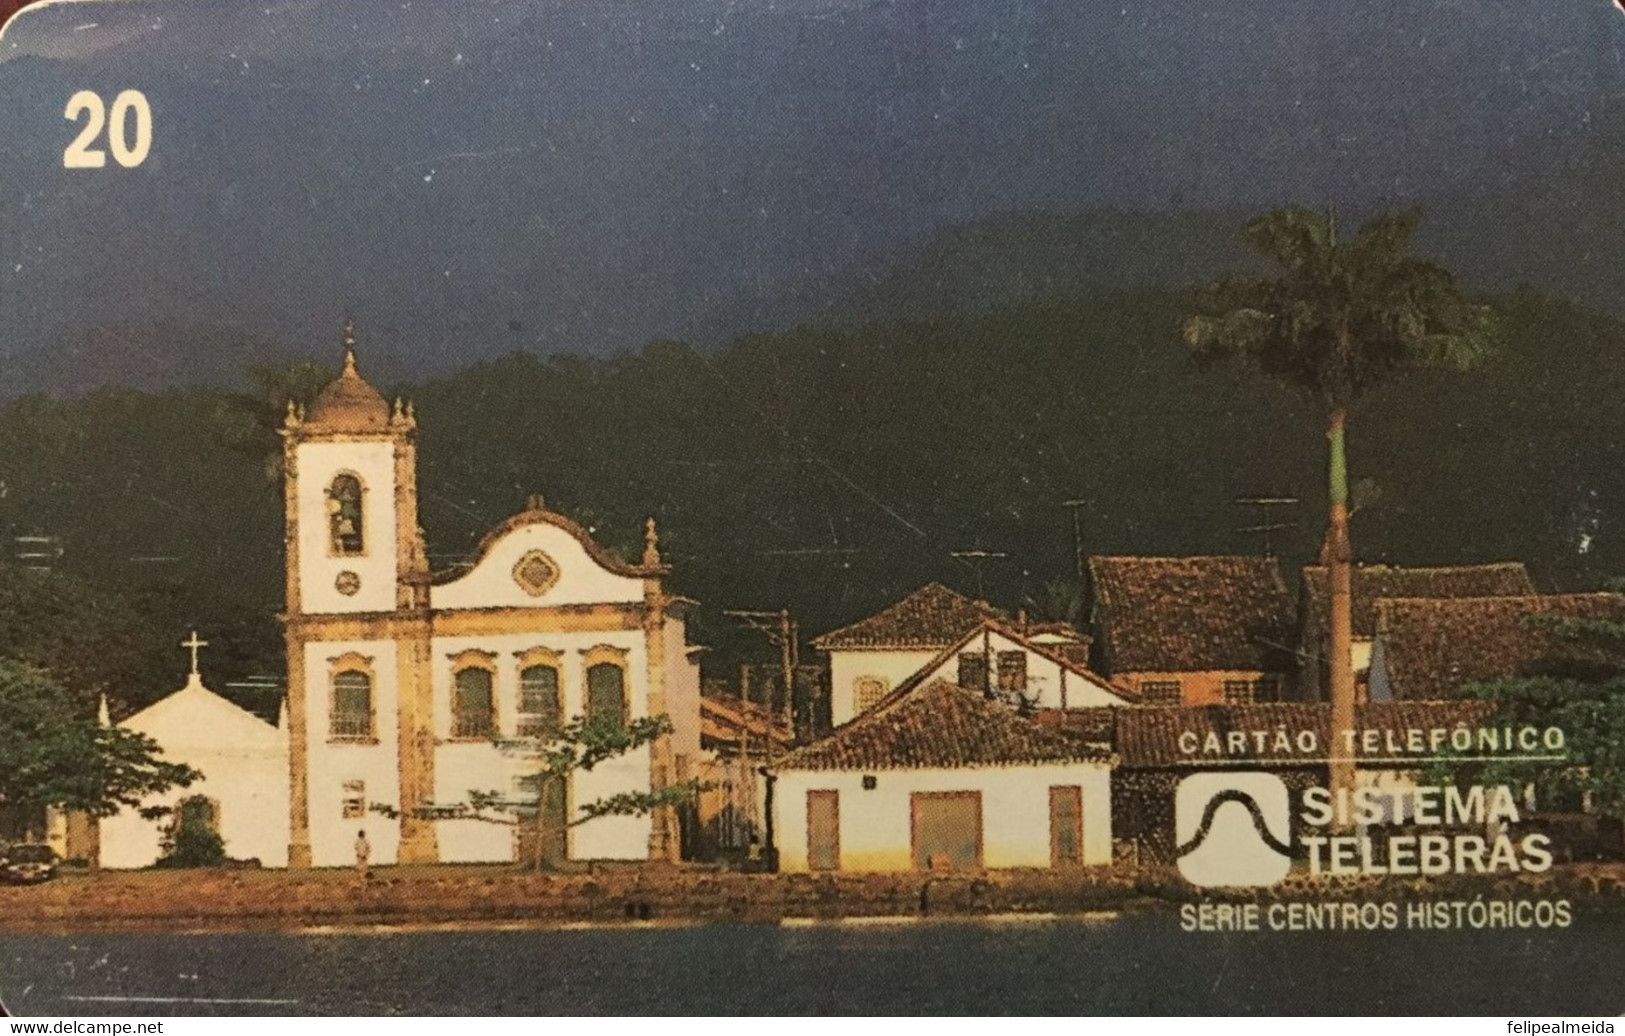 Phone Card Manufactured By Telebrasr In 1997 - Series Historic Centers - Parati, Rio De Janeiro - Instituto Do Patrimôni - Culture